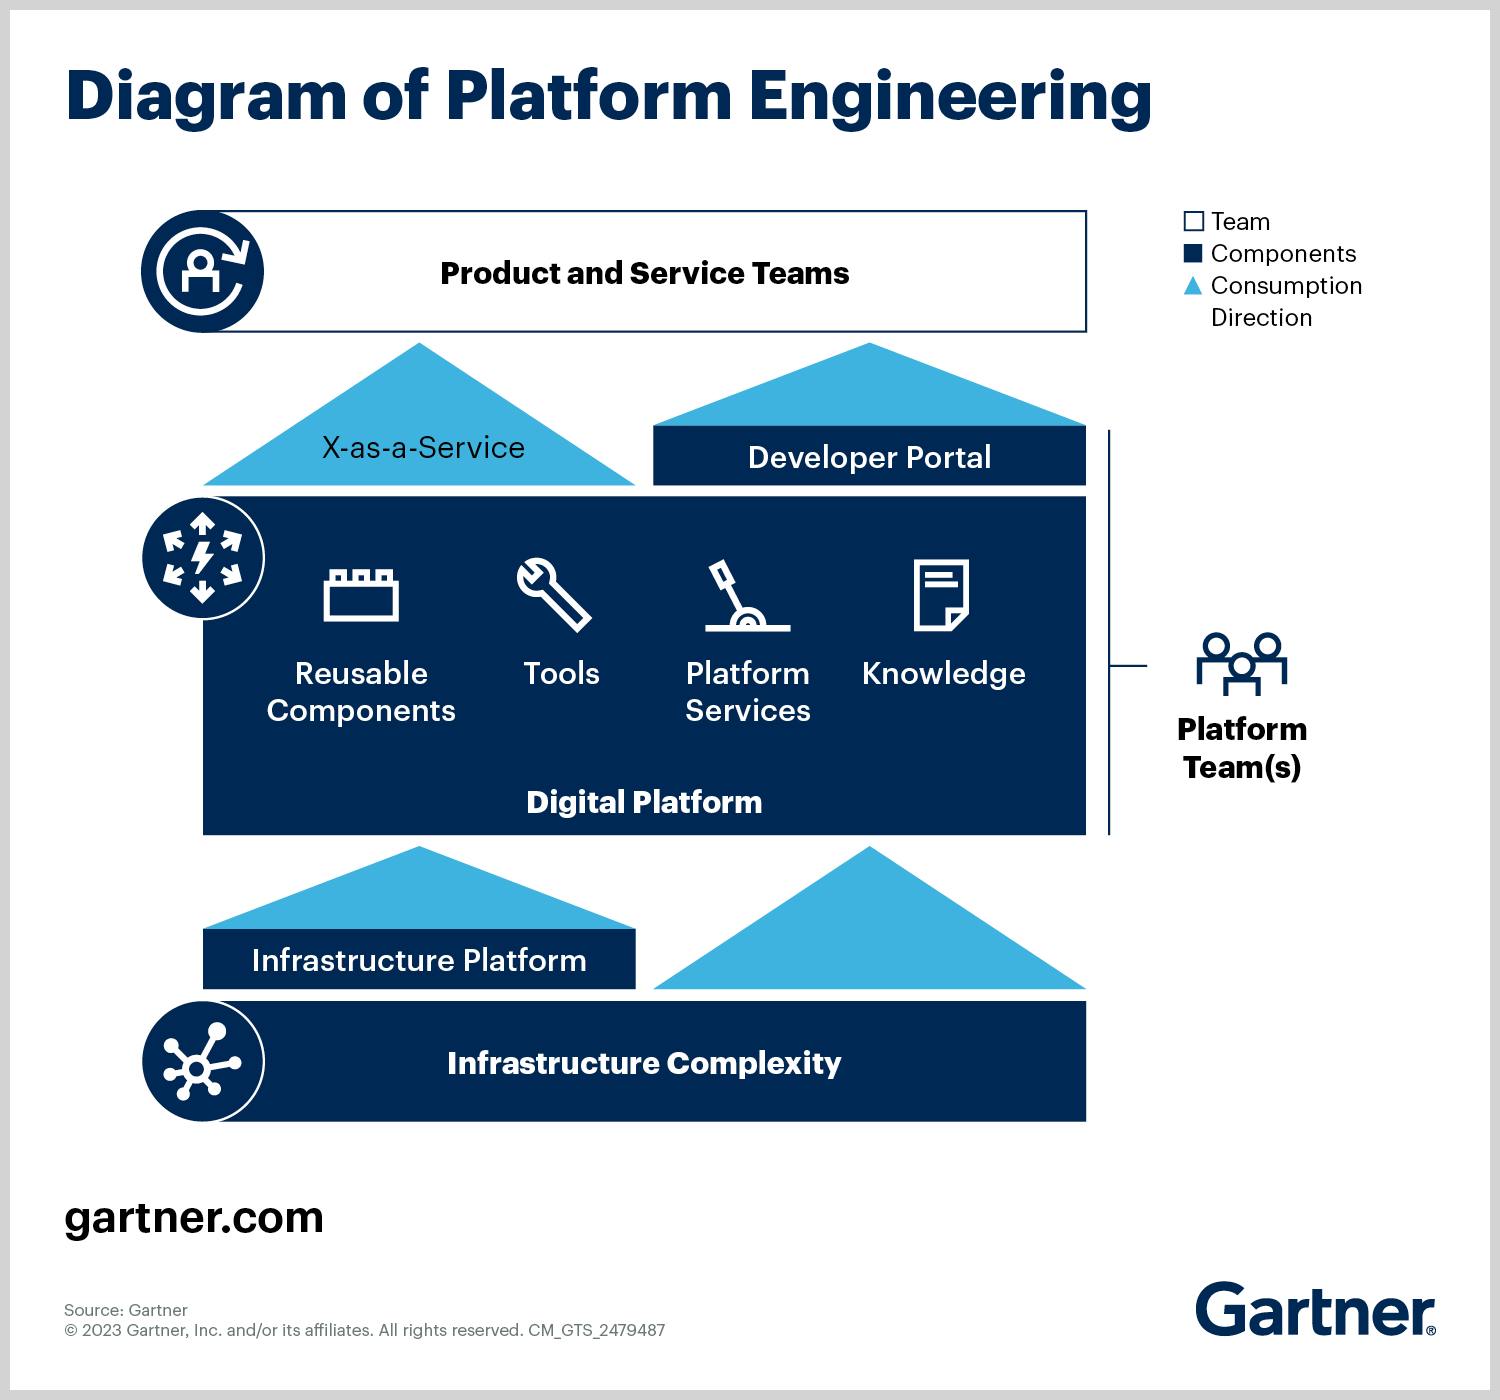 Internal Developer Platform facilitates team collaboration through centralized platform engineering. Source: https://www.gartner.com/en/articles/what-is-platform-engineering 